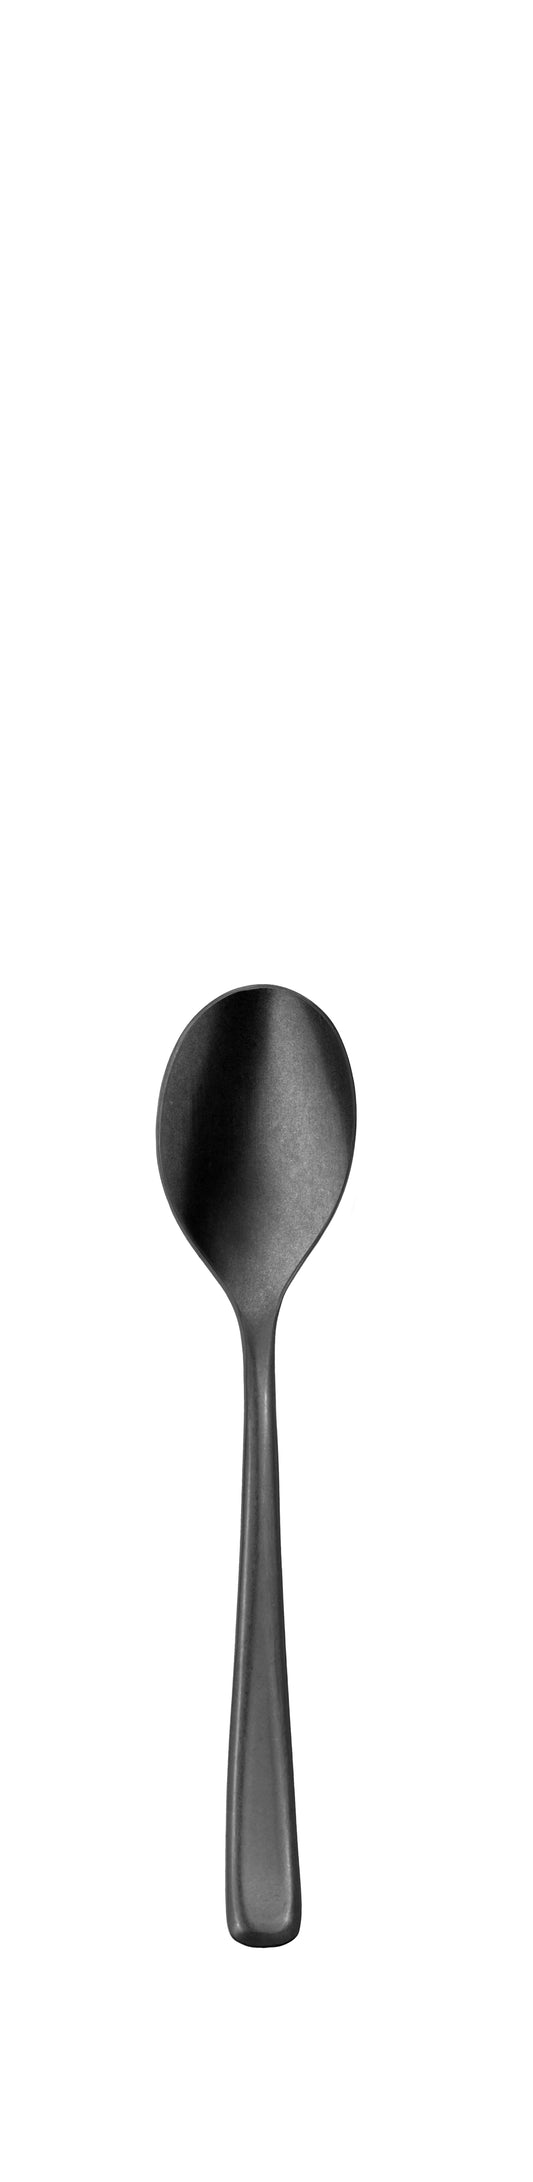 Coffee spoon MIDAN PVD gun metal stonewashed 136 mm